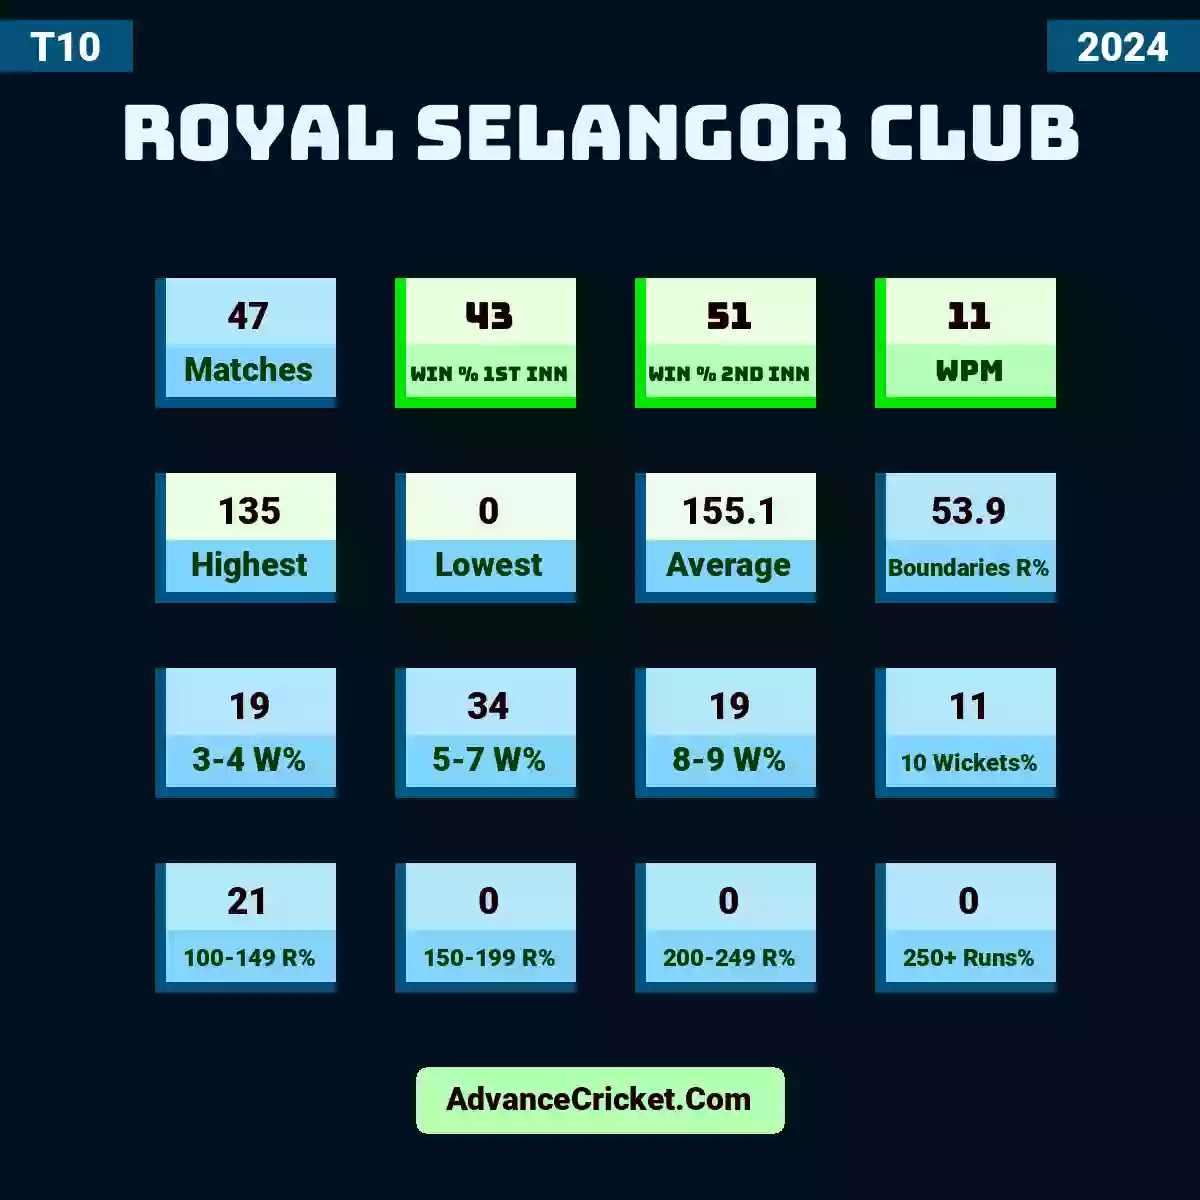 Image showing Royal Selangor Club T10 2024 with Matches: 33, Win % 1st Inn: 52, Win % 2nd Inn: 42, WPM: 11.3, Highest: 135, Lowest: 0, Average: 151.2, Boundaries R%: 52.1, 3-4 W%: 20, 5-7 W%: 29, 8-9 W%: 20, 10 Wickets%: 14, 100-149 R%: 18, 150-199 R%: 0, 200-249 R%: 0, 250+ Runs%: 0.